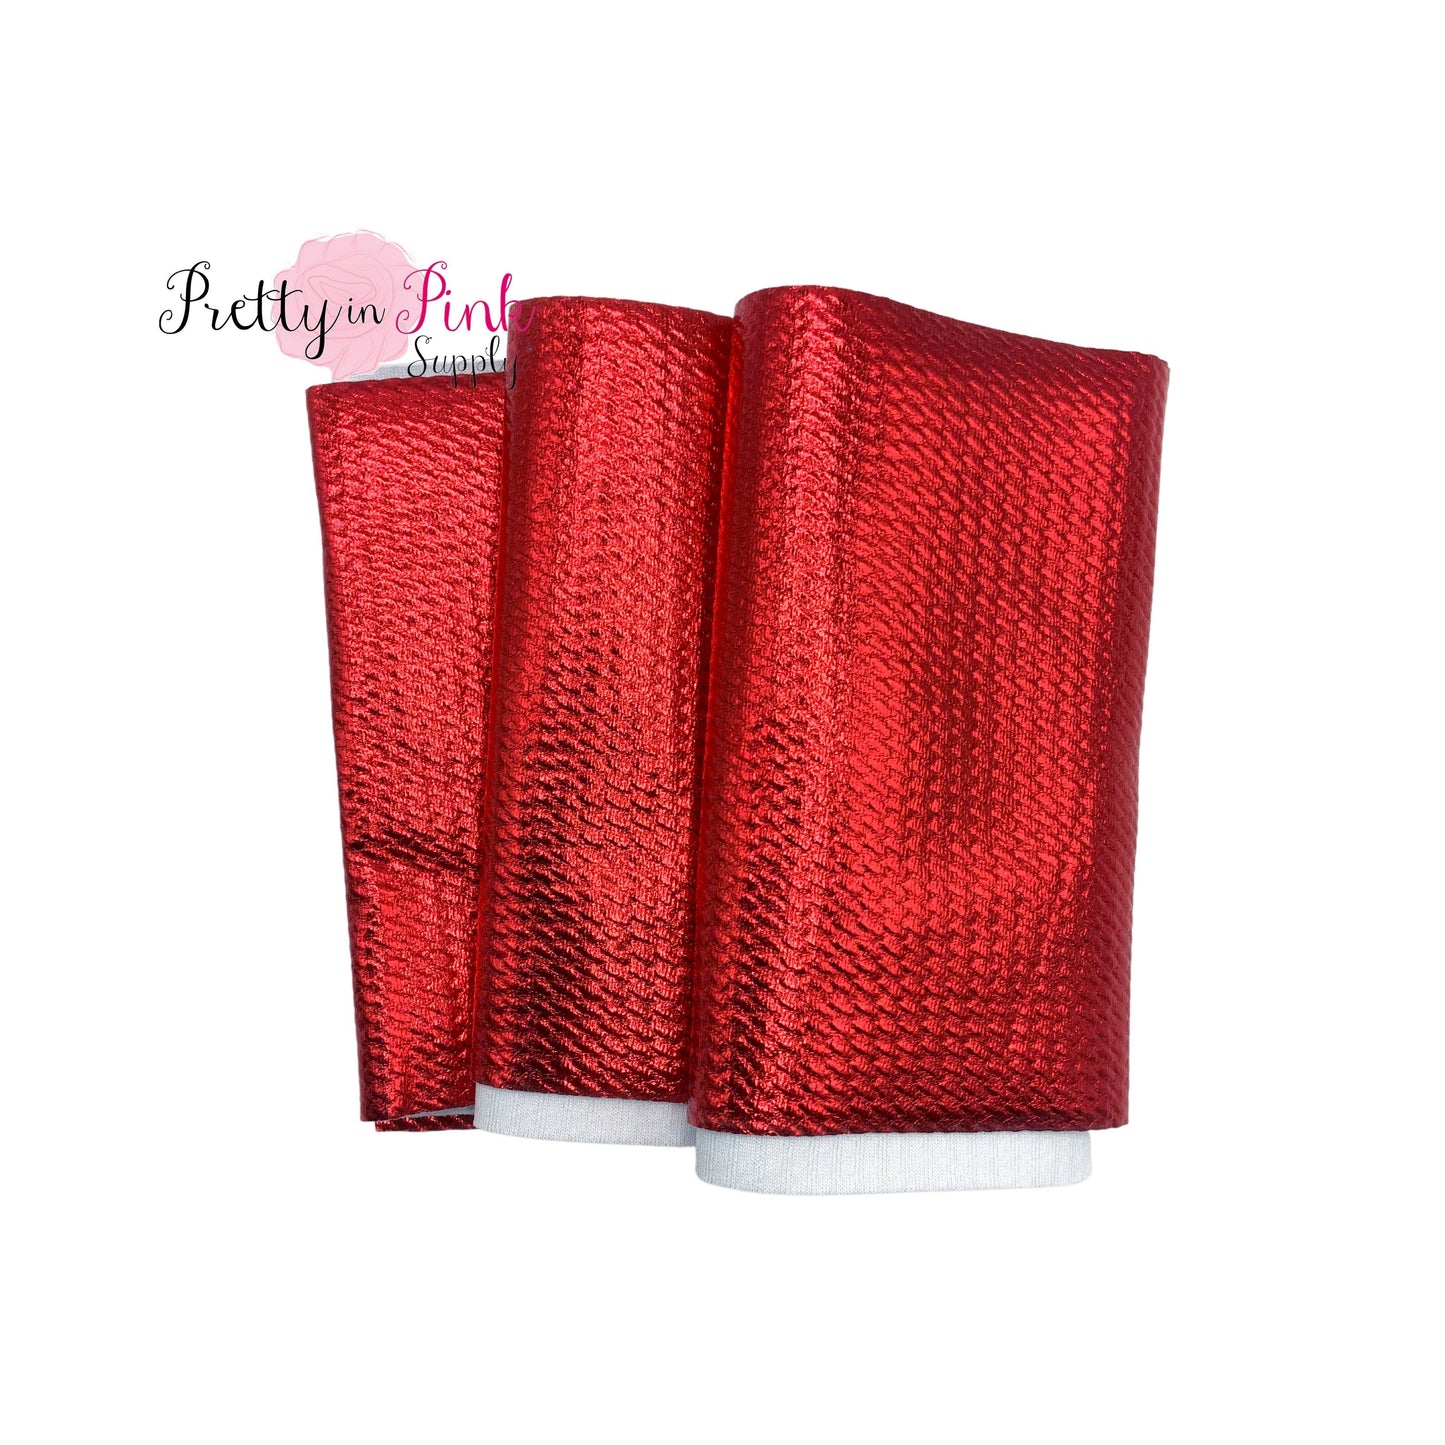 Folded Red Metallic Liverpool Fabric Strip